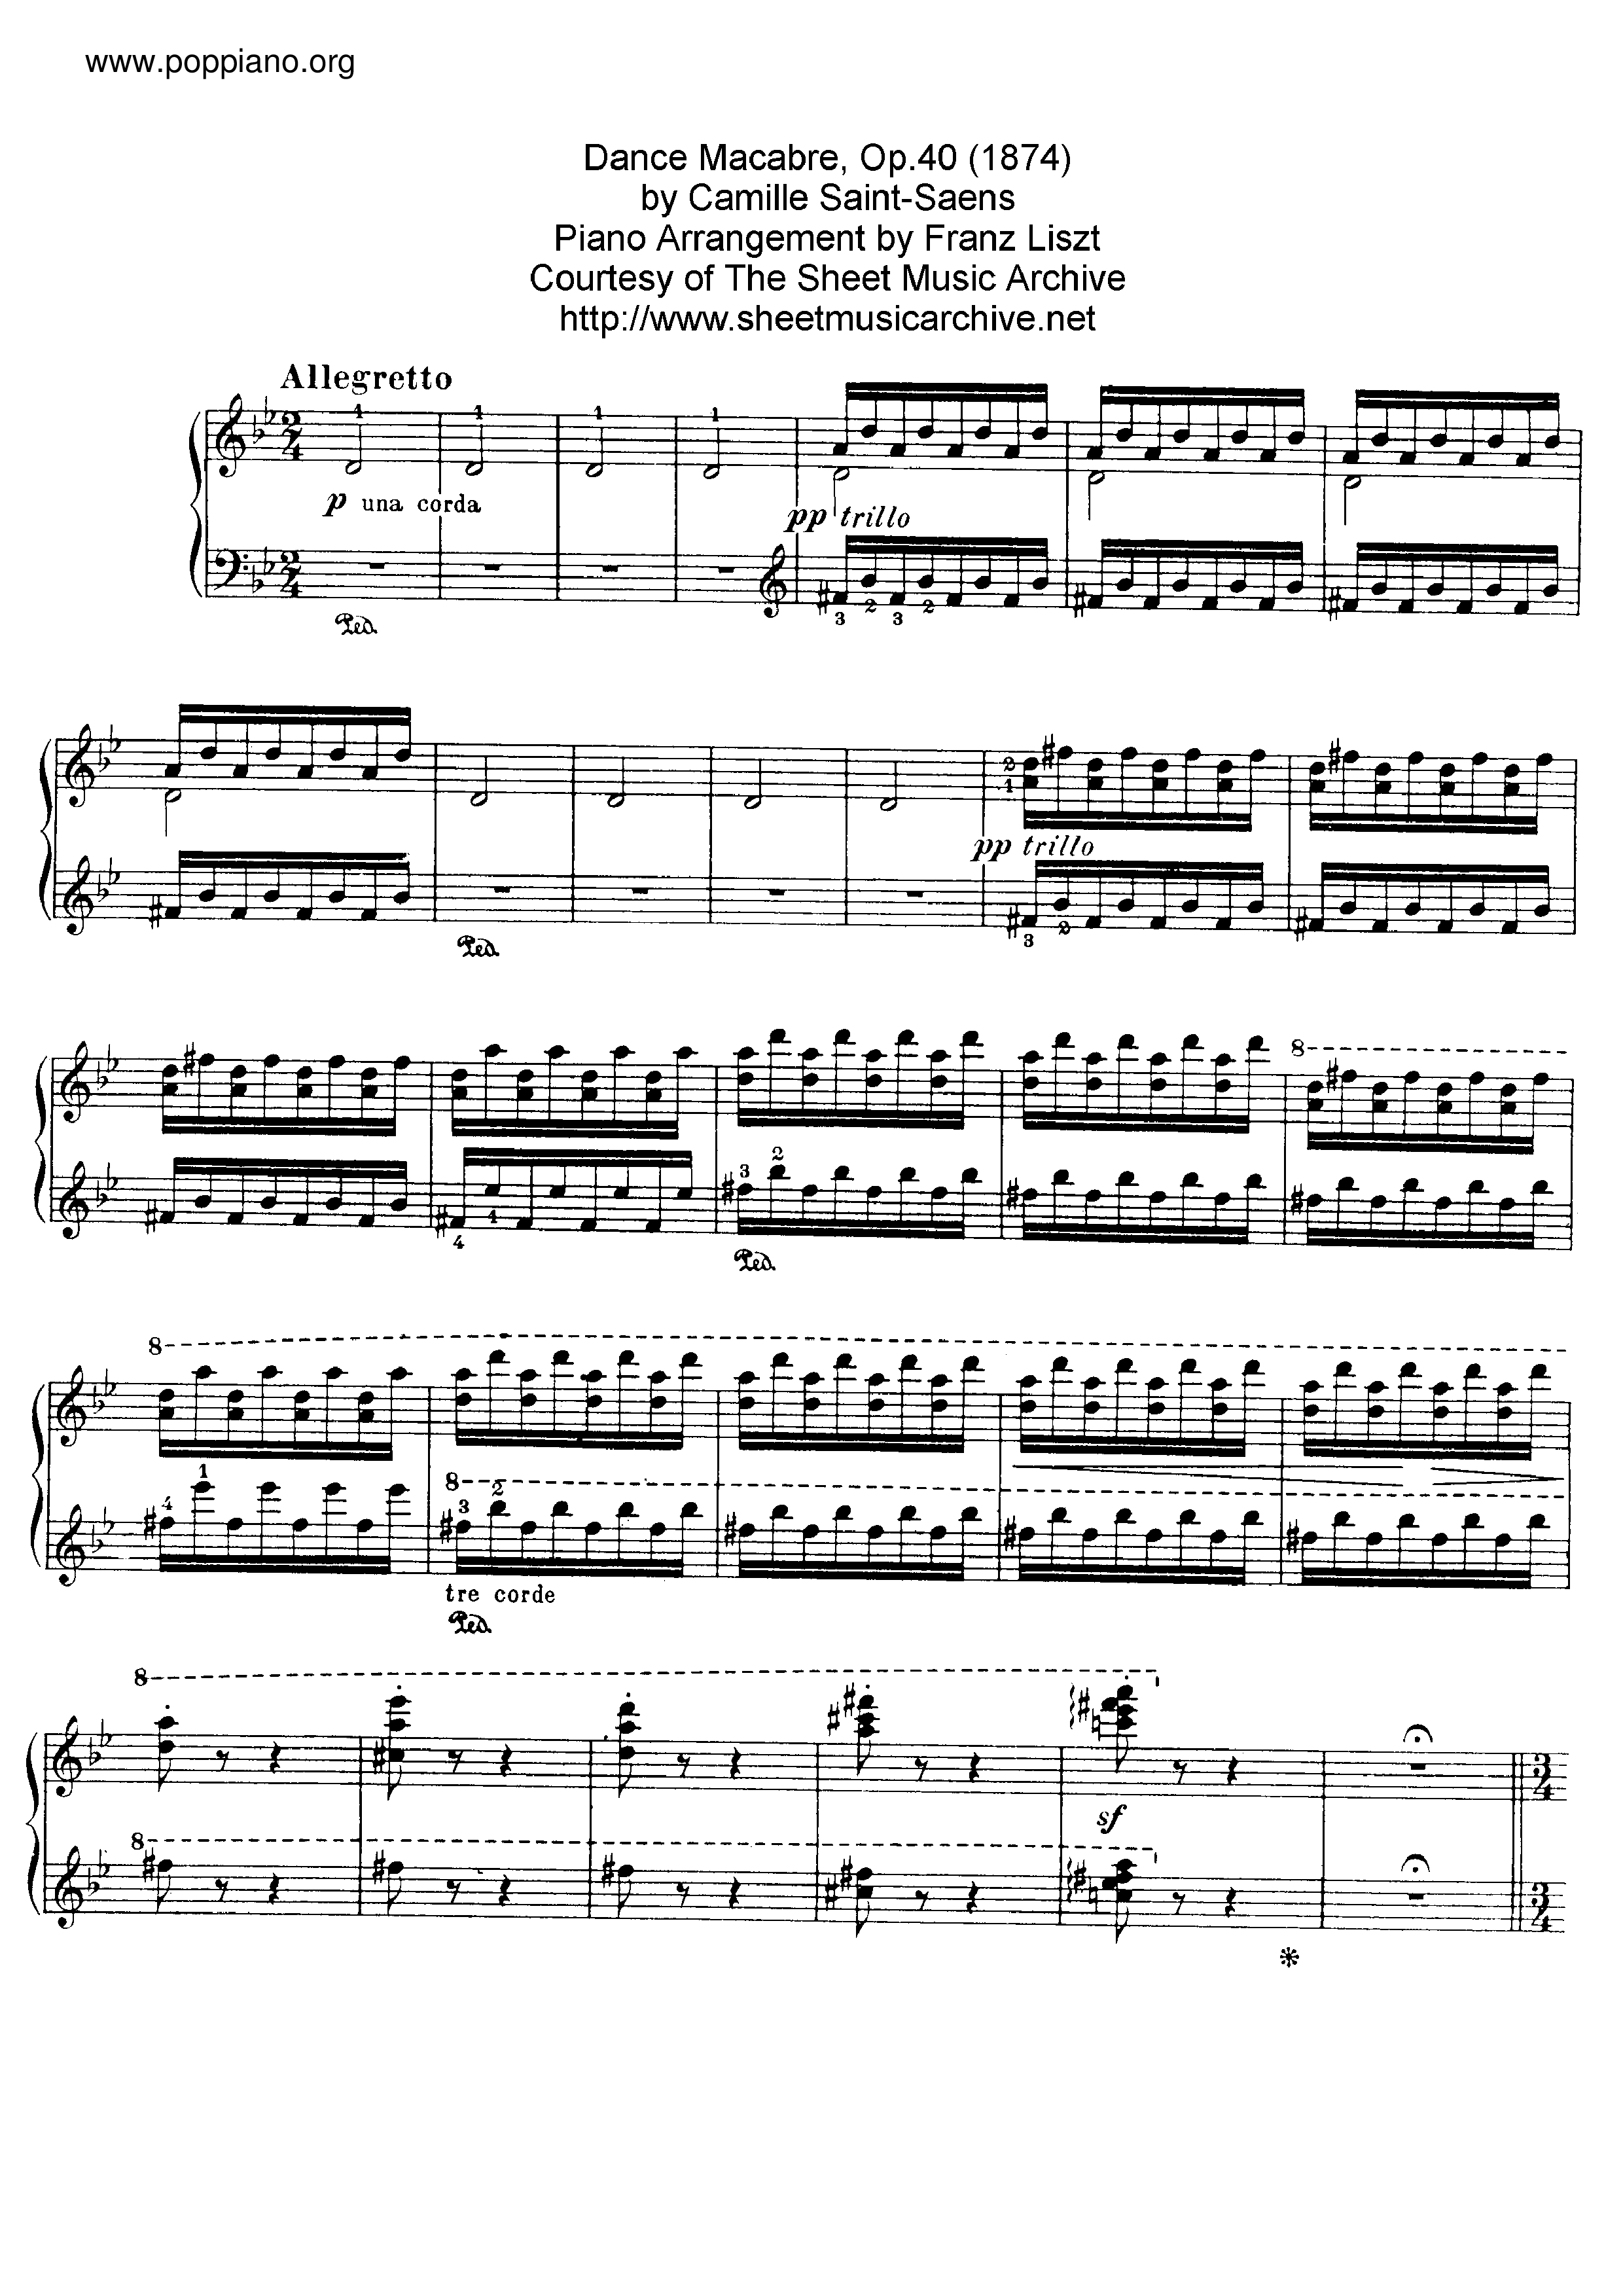 Danse Macabre Op.40, by Saint-Saens, S.555 Score